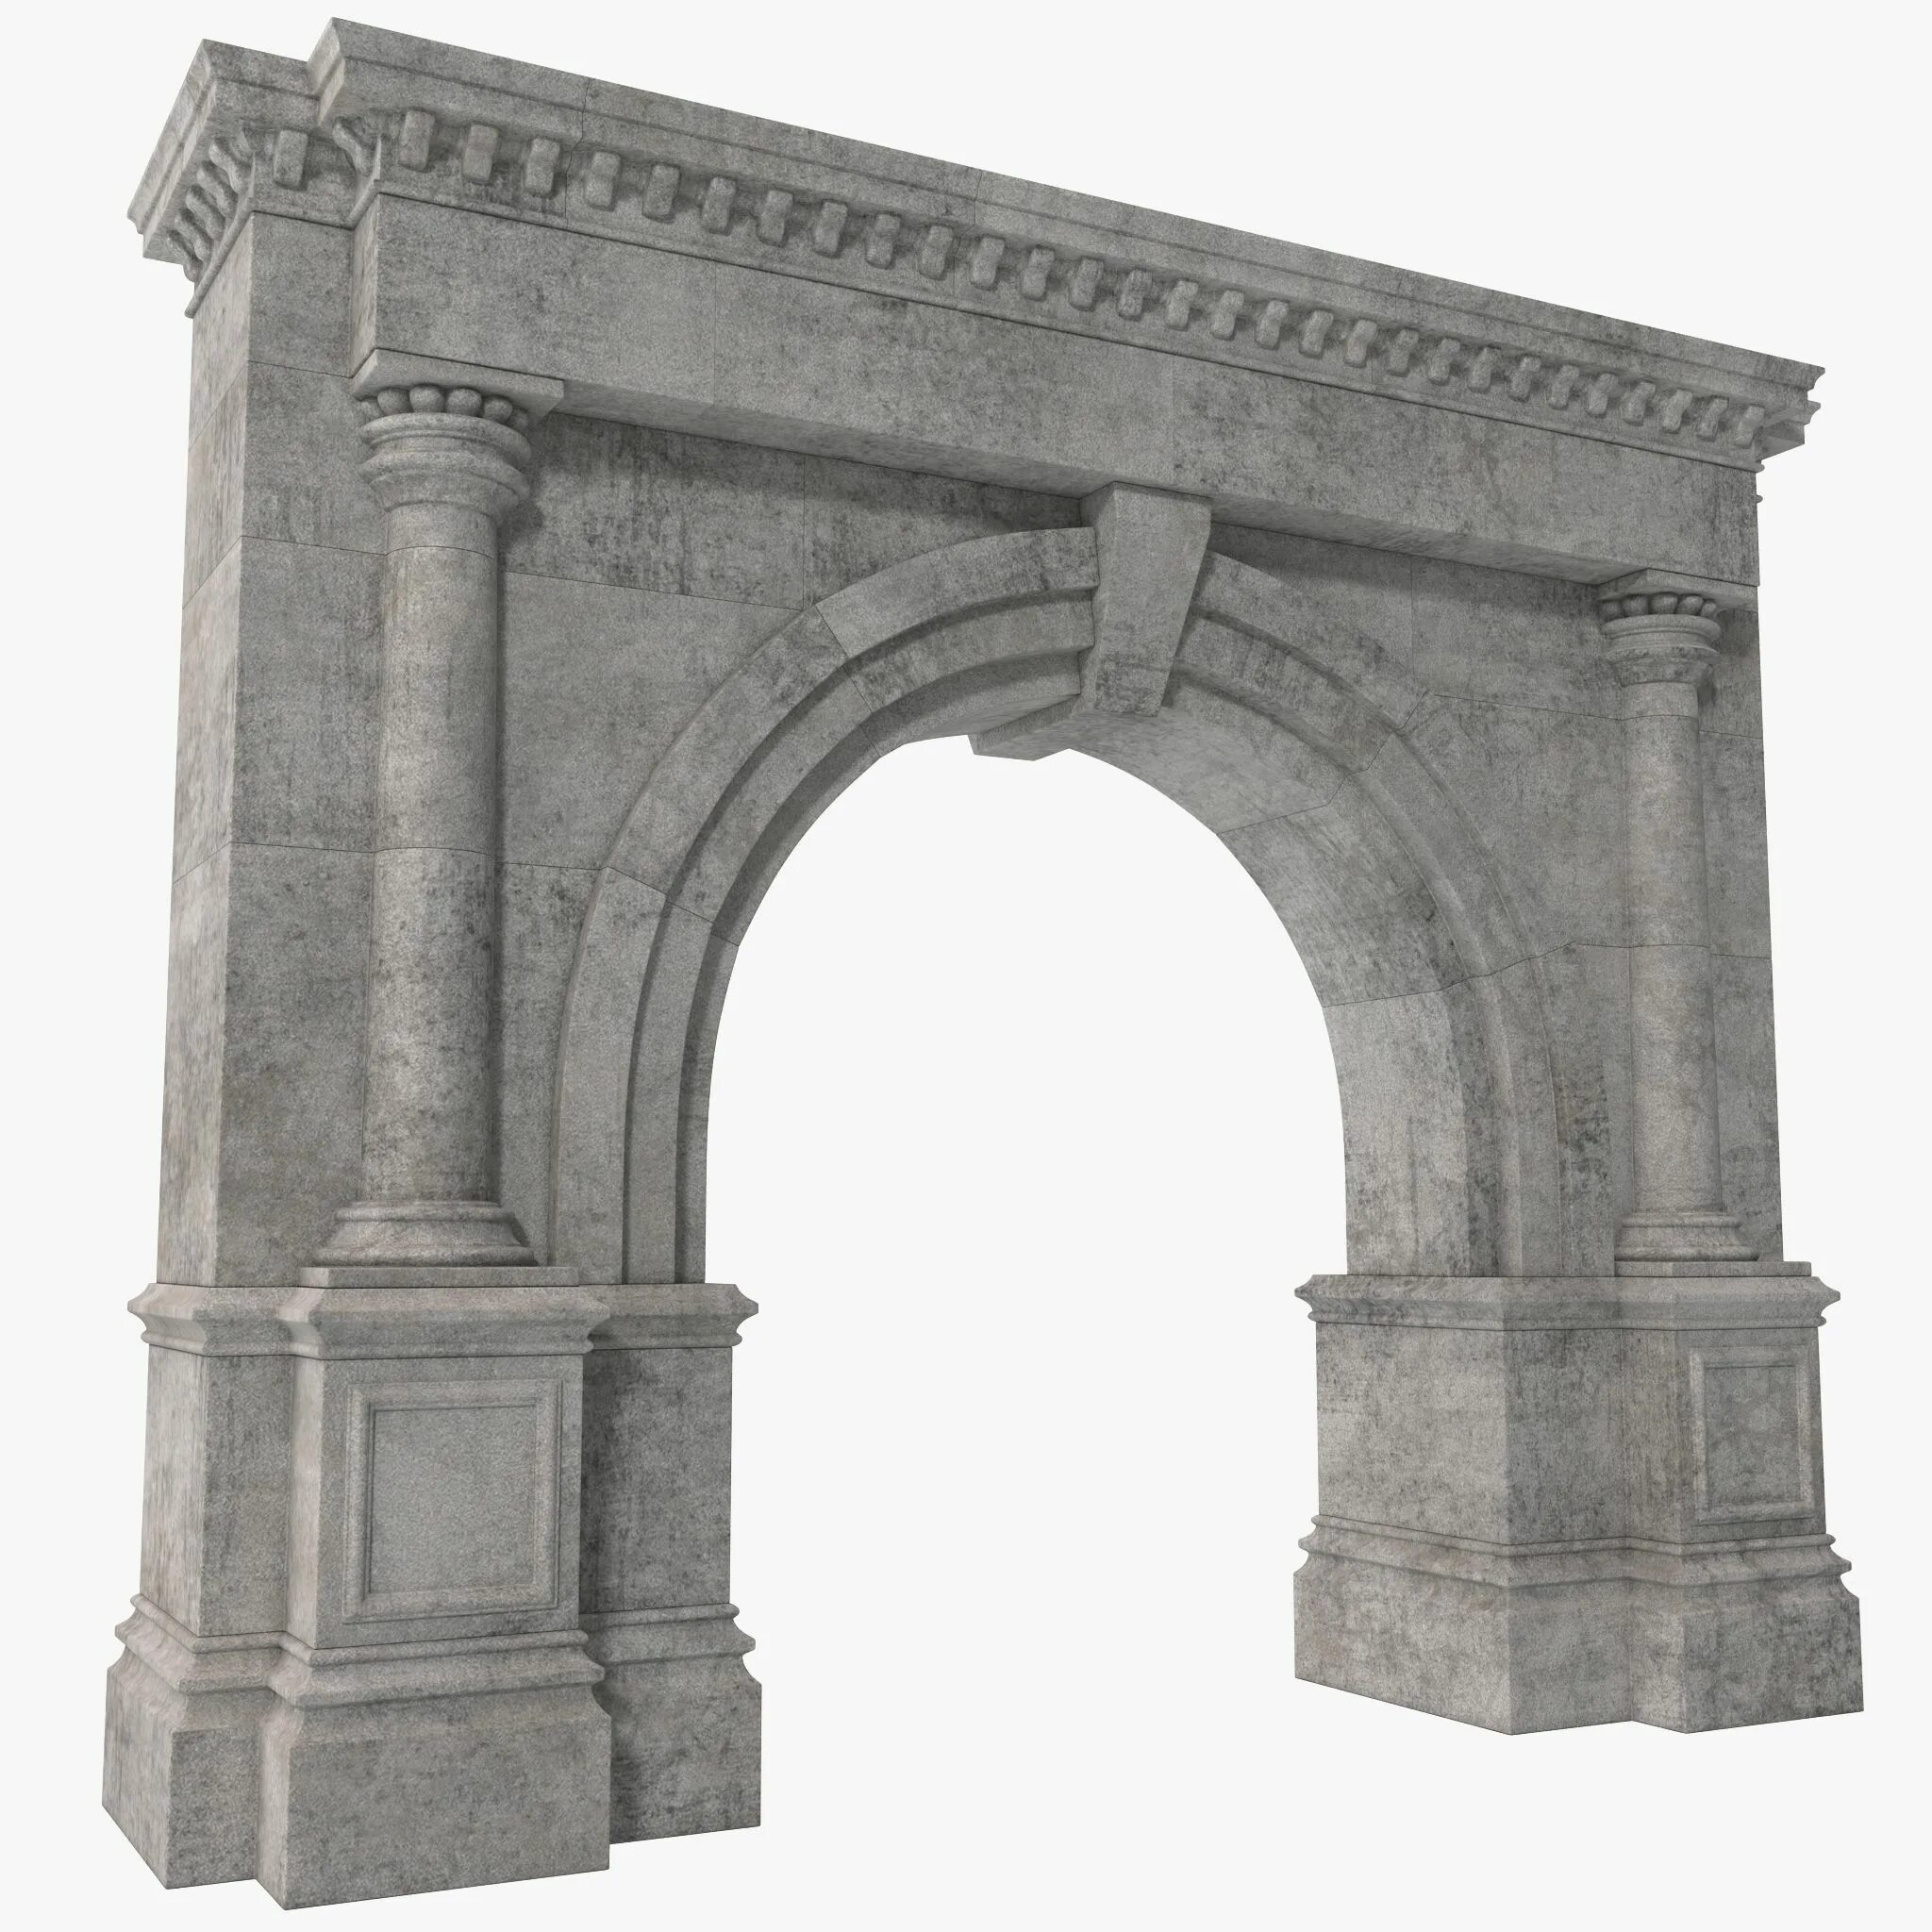 3д арка. Арка Триумфальная 3d model. Клинчатая арка в Риме. Полуциркульная арка в древнем Риме. Арка 3ds Max.